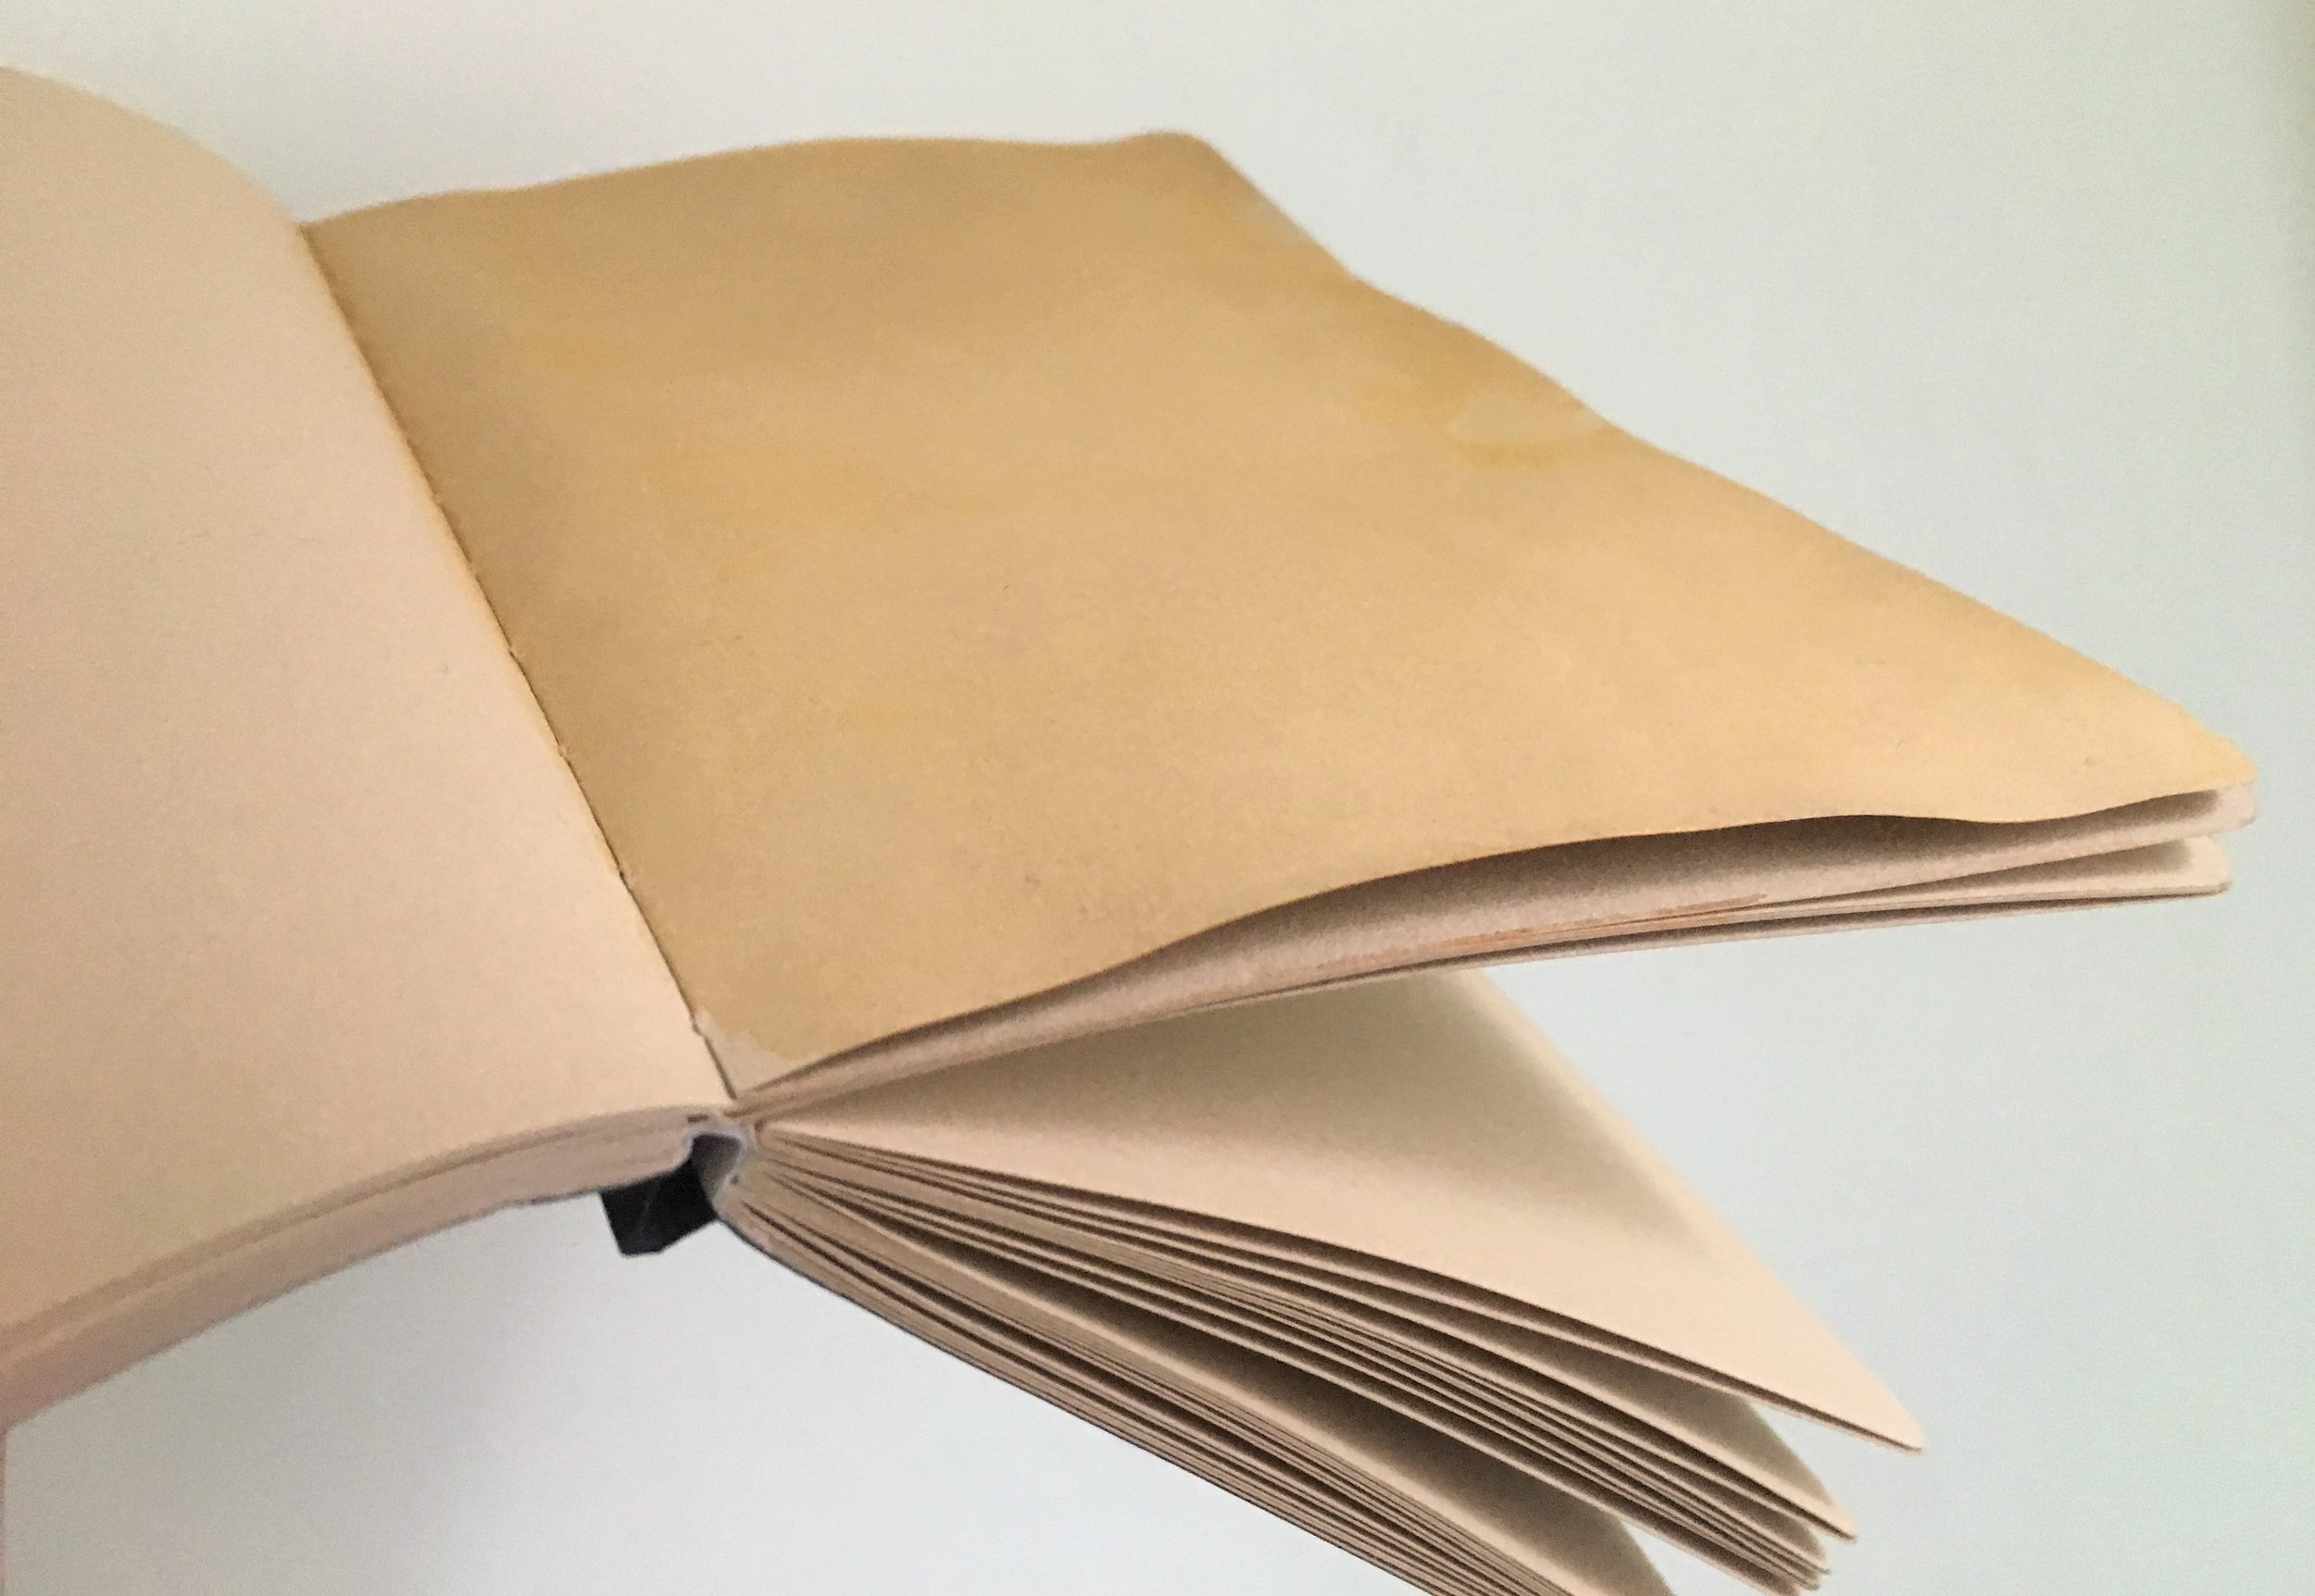 Review: Stillman & Birn Sketchbooks - The Well-Appointed Desk